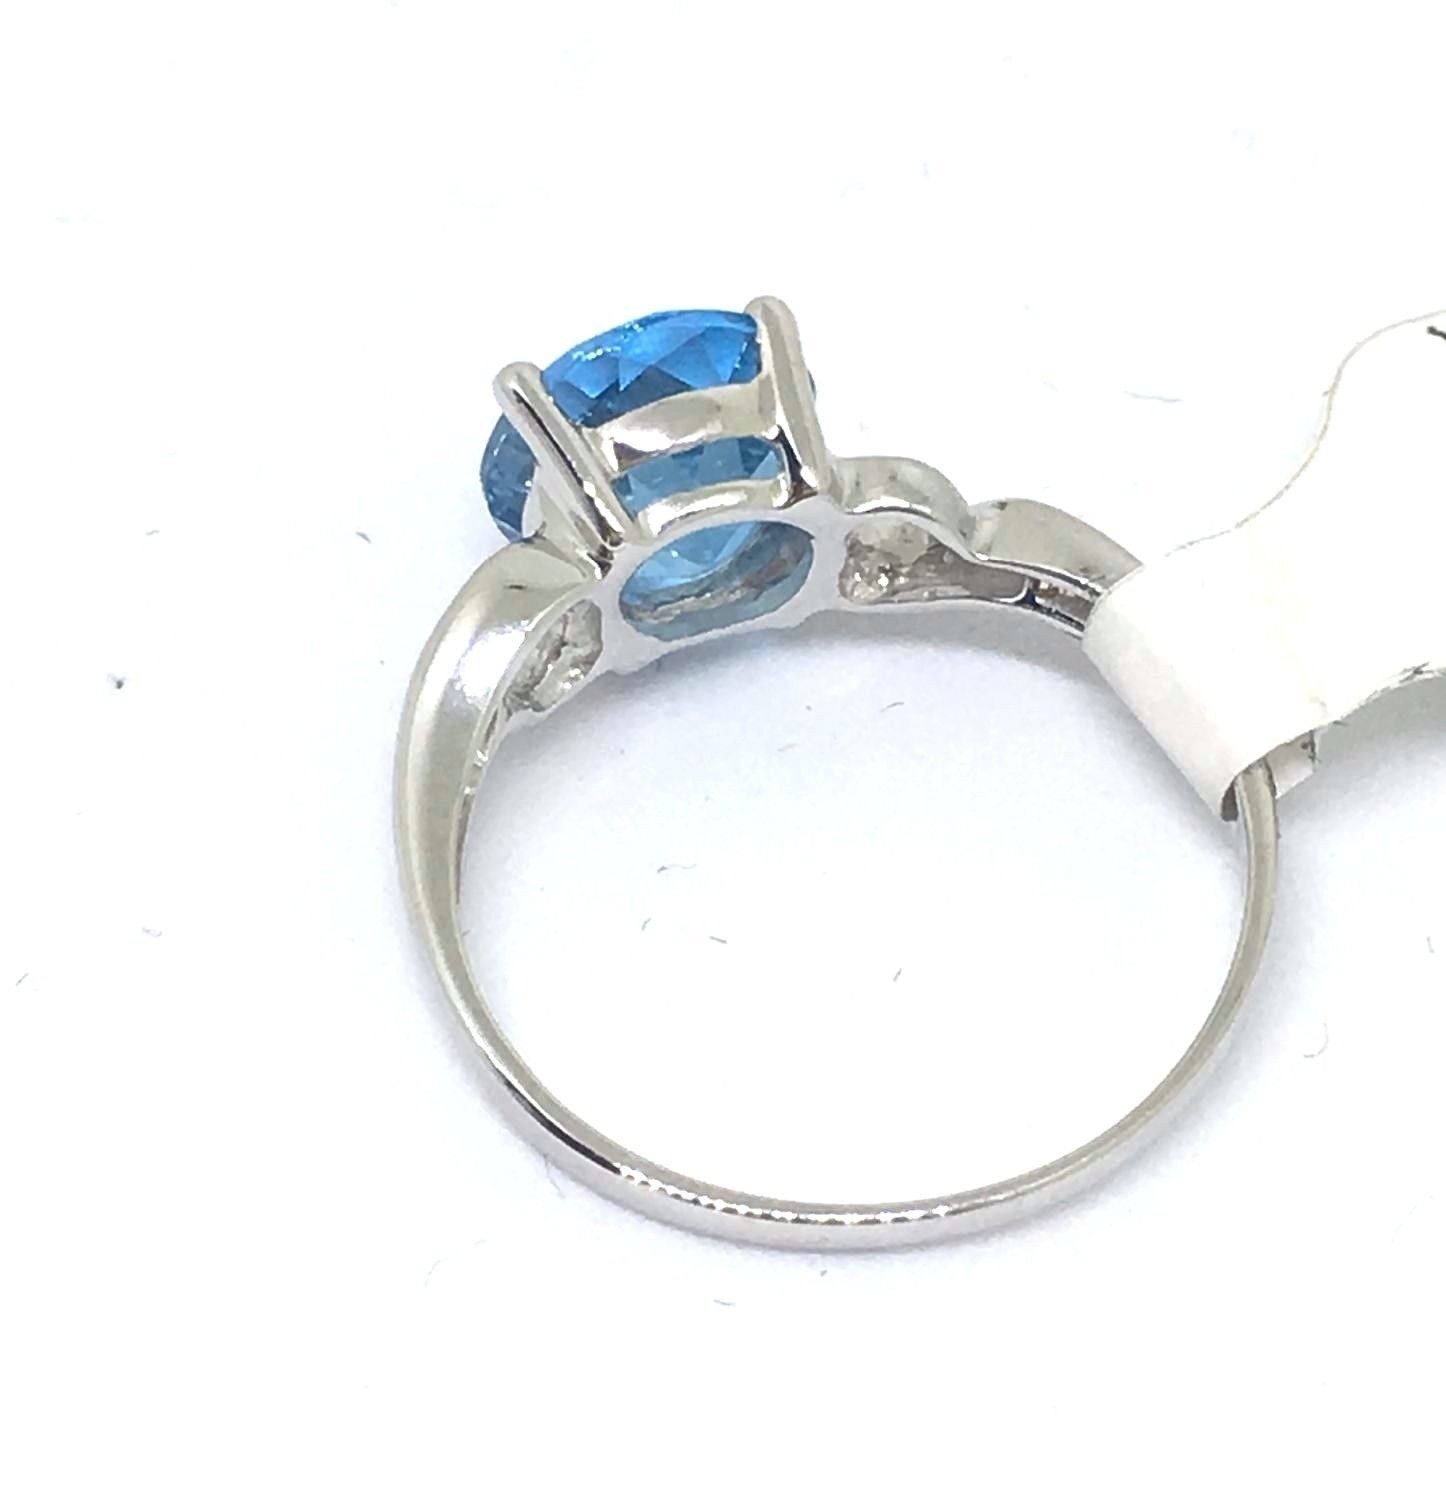 14K white gold and Genuine 2.35K Blue Topaz Ring, 2.3 grams $850 NWT Size 6 1/2